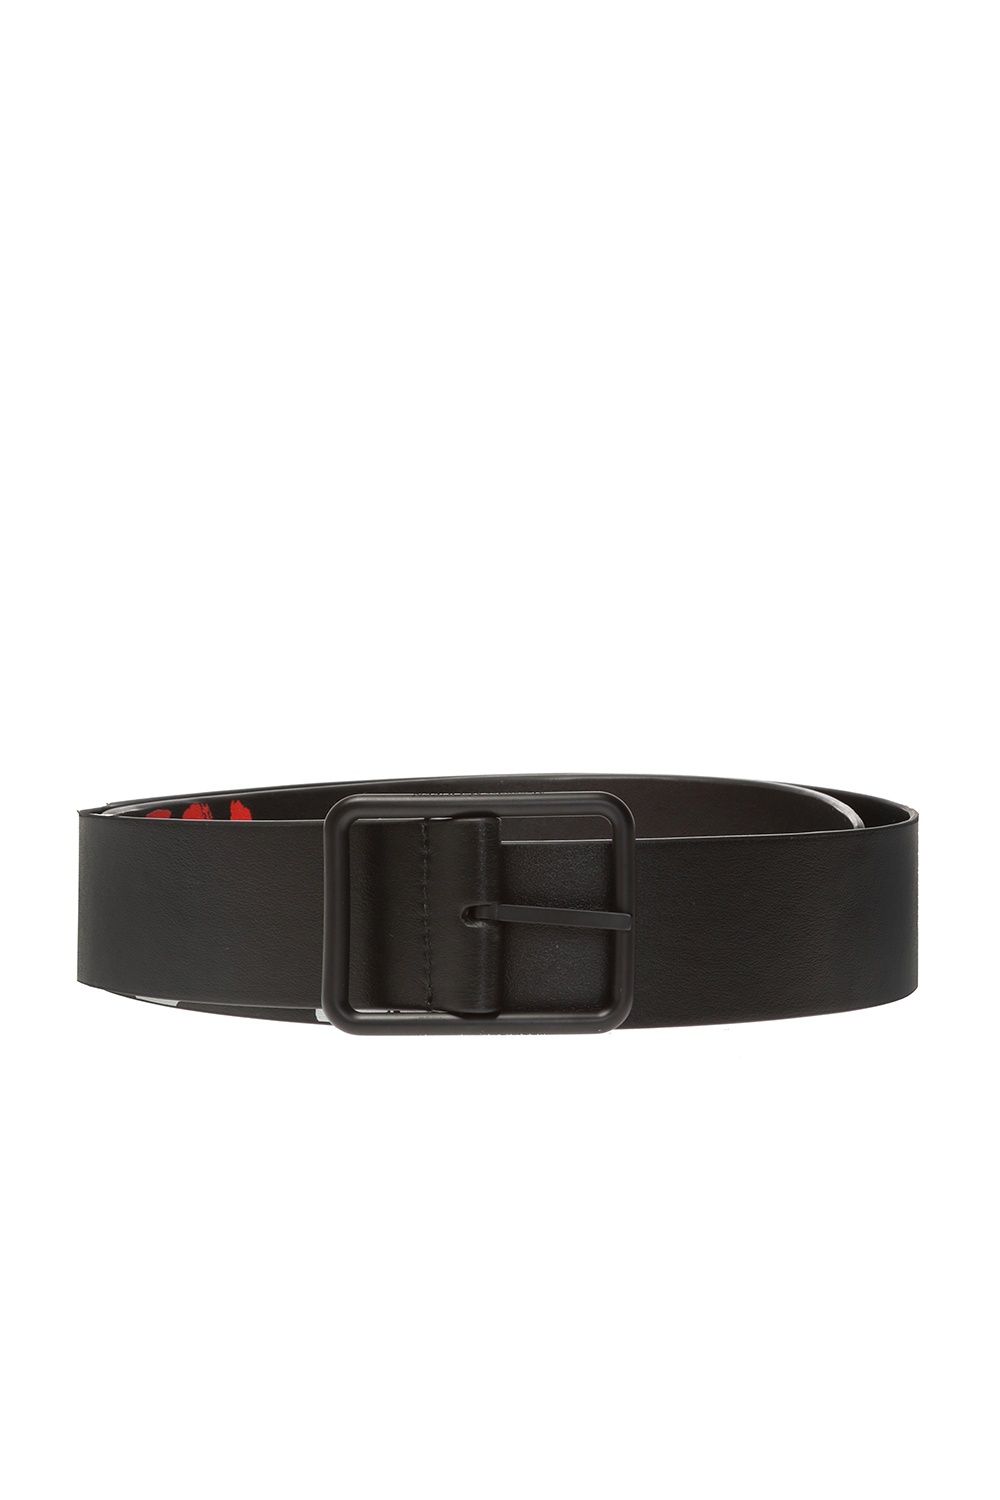 Black Leather belt with logo Burberry - Vitkac TW